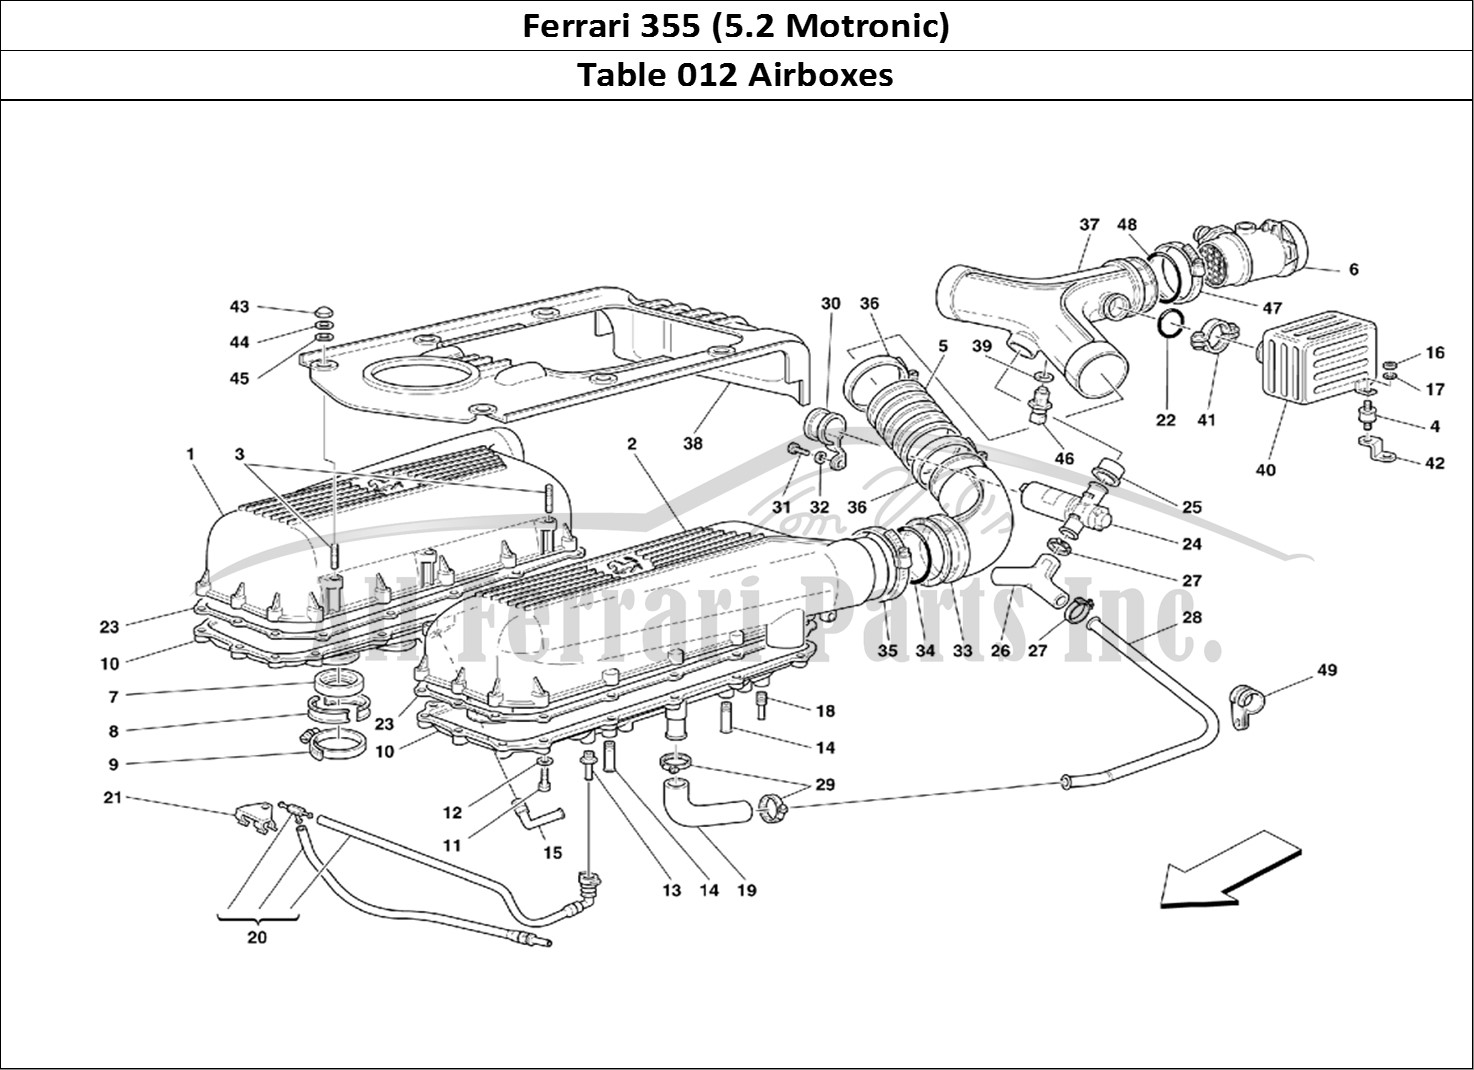 Ferrari Parts Ferrari 355 (5.2 Motronic) Page 012 Air Boxes